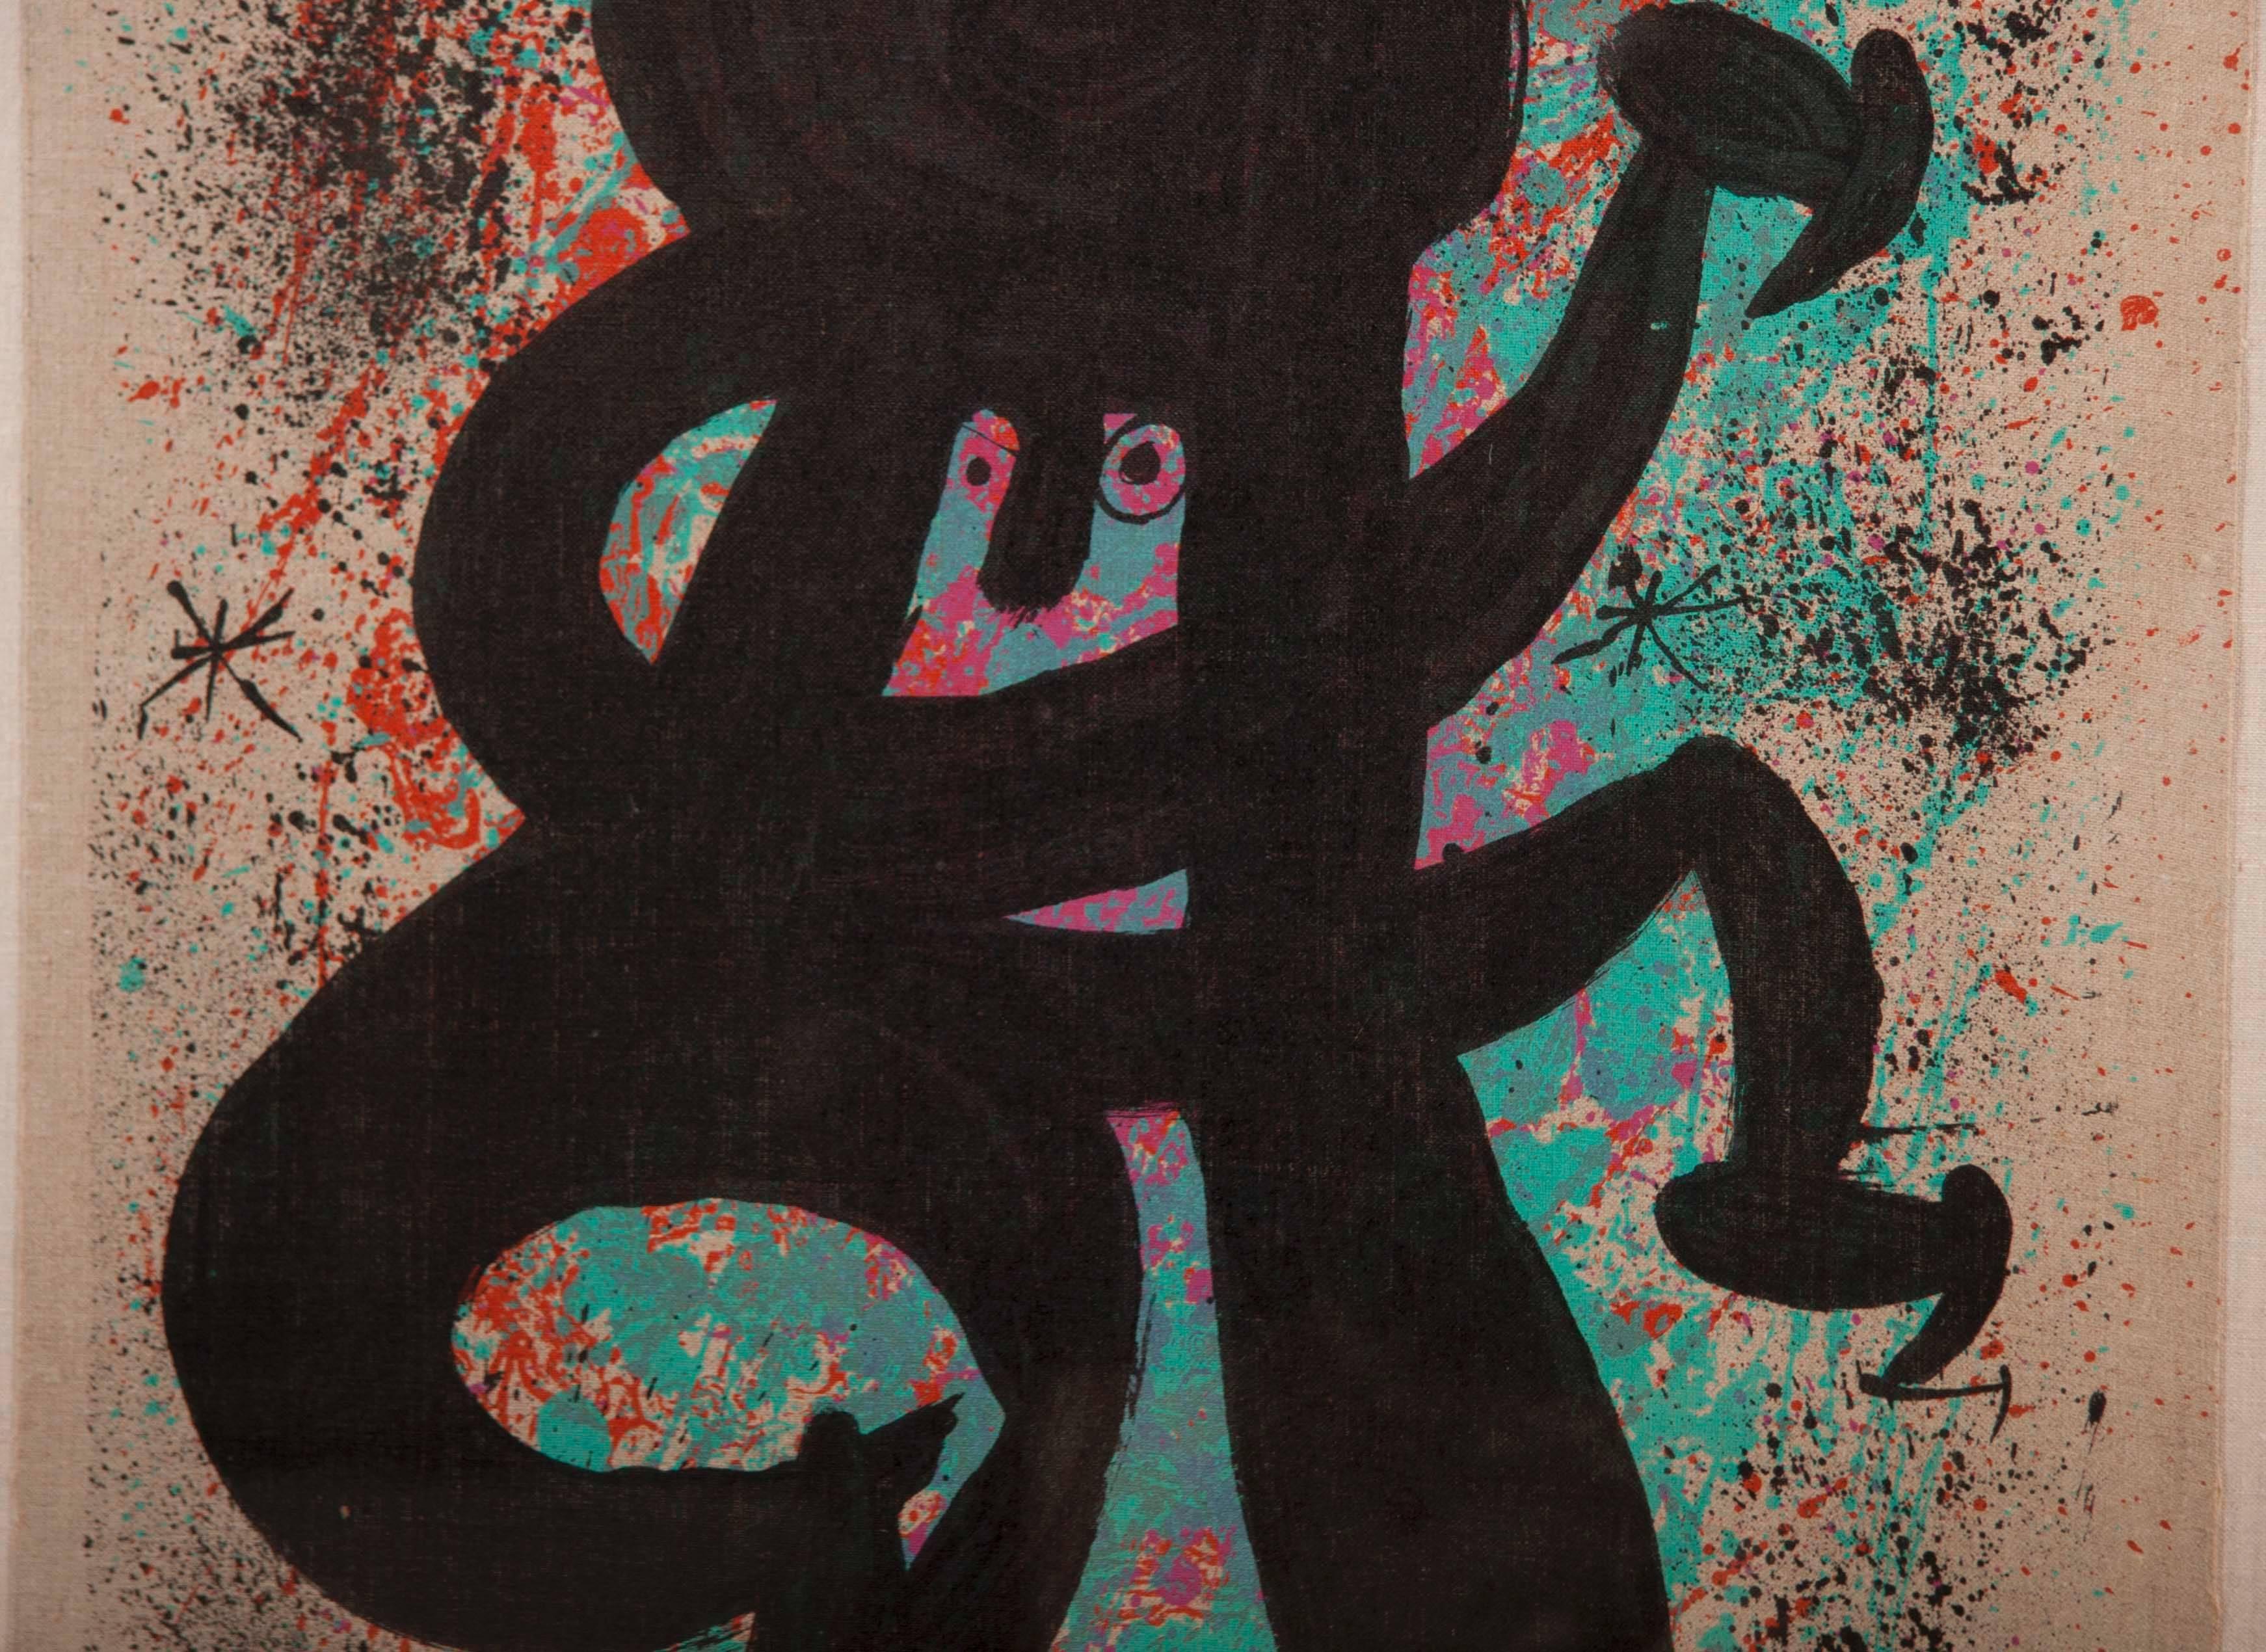 Paper Carborundum Lithograph by Joan Miro